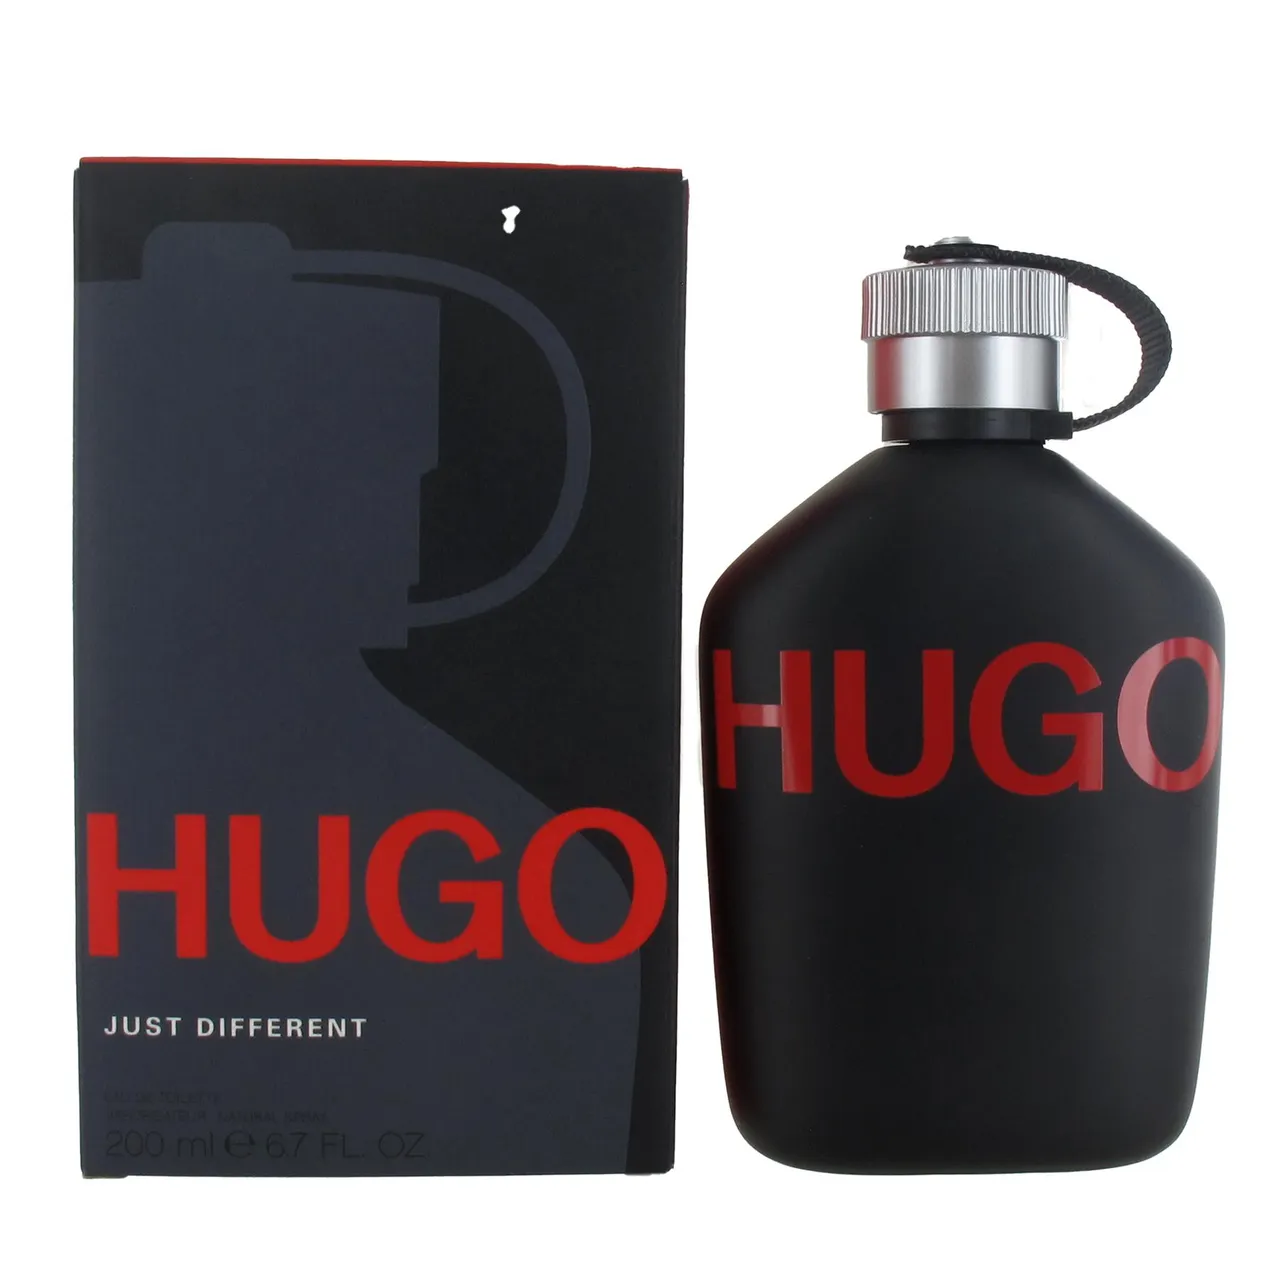 Hugo Boss Hugo Just Different 200ml Eau de Toilette Spray for Him